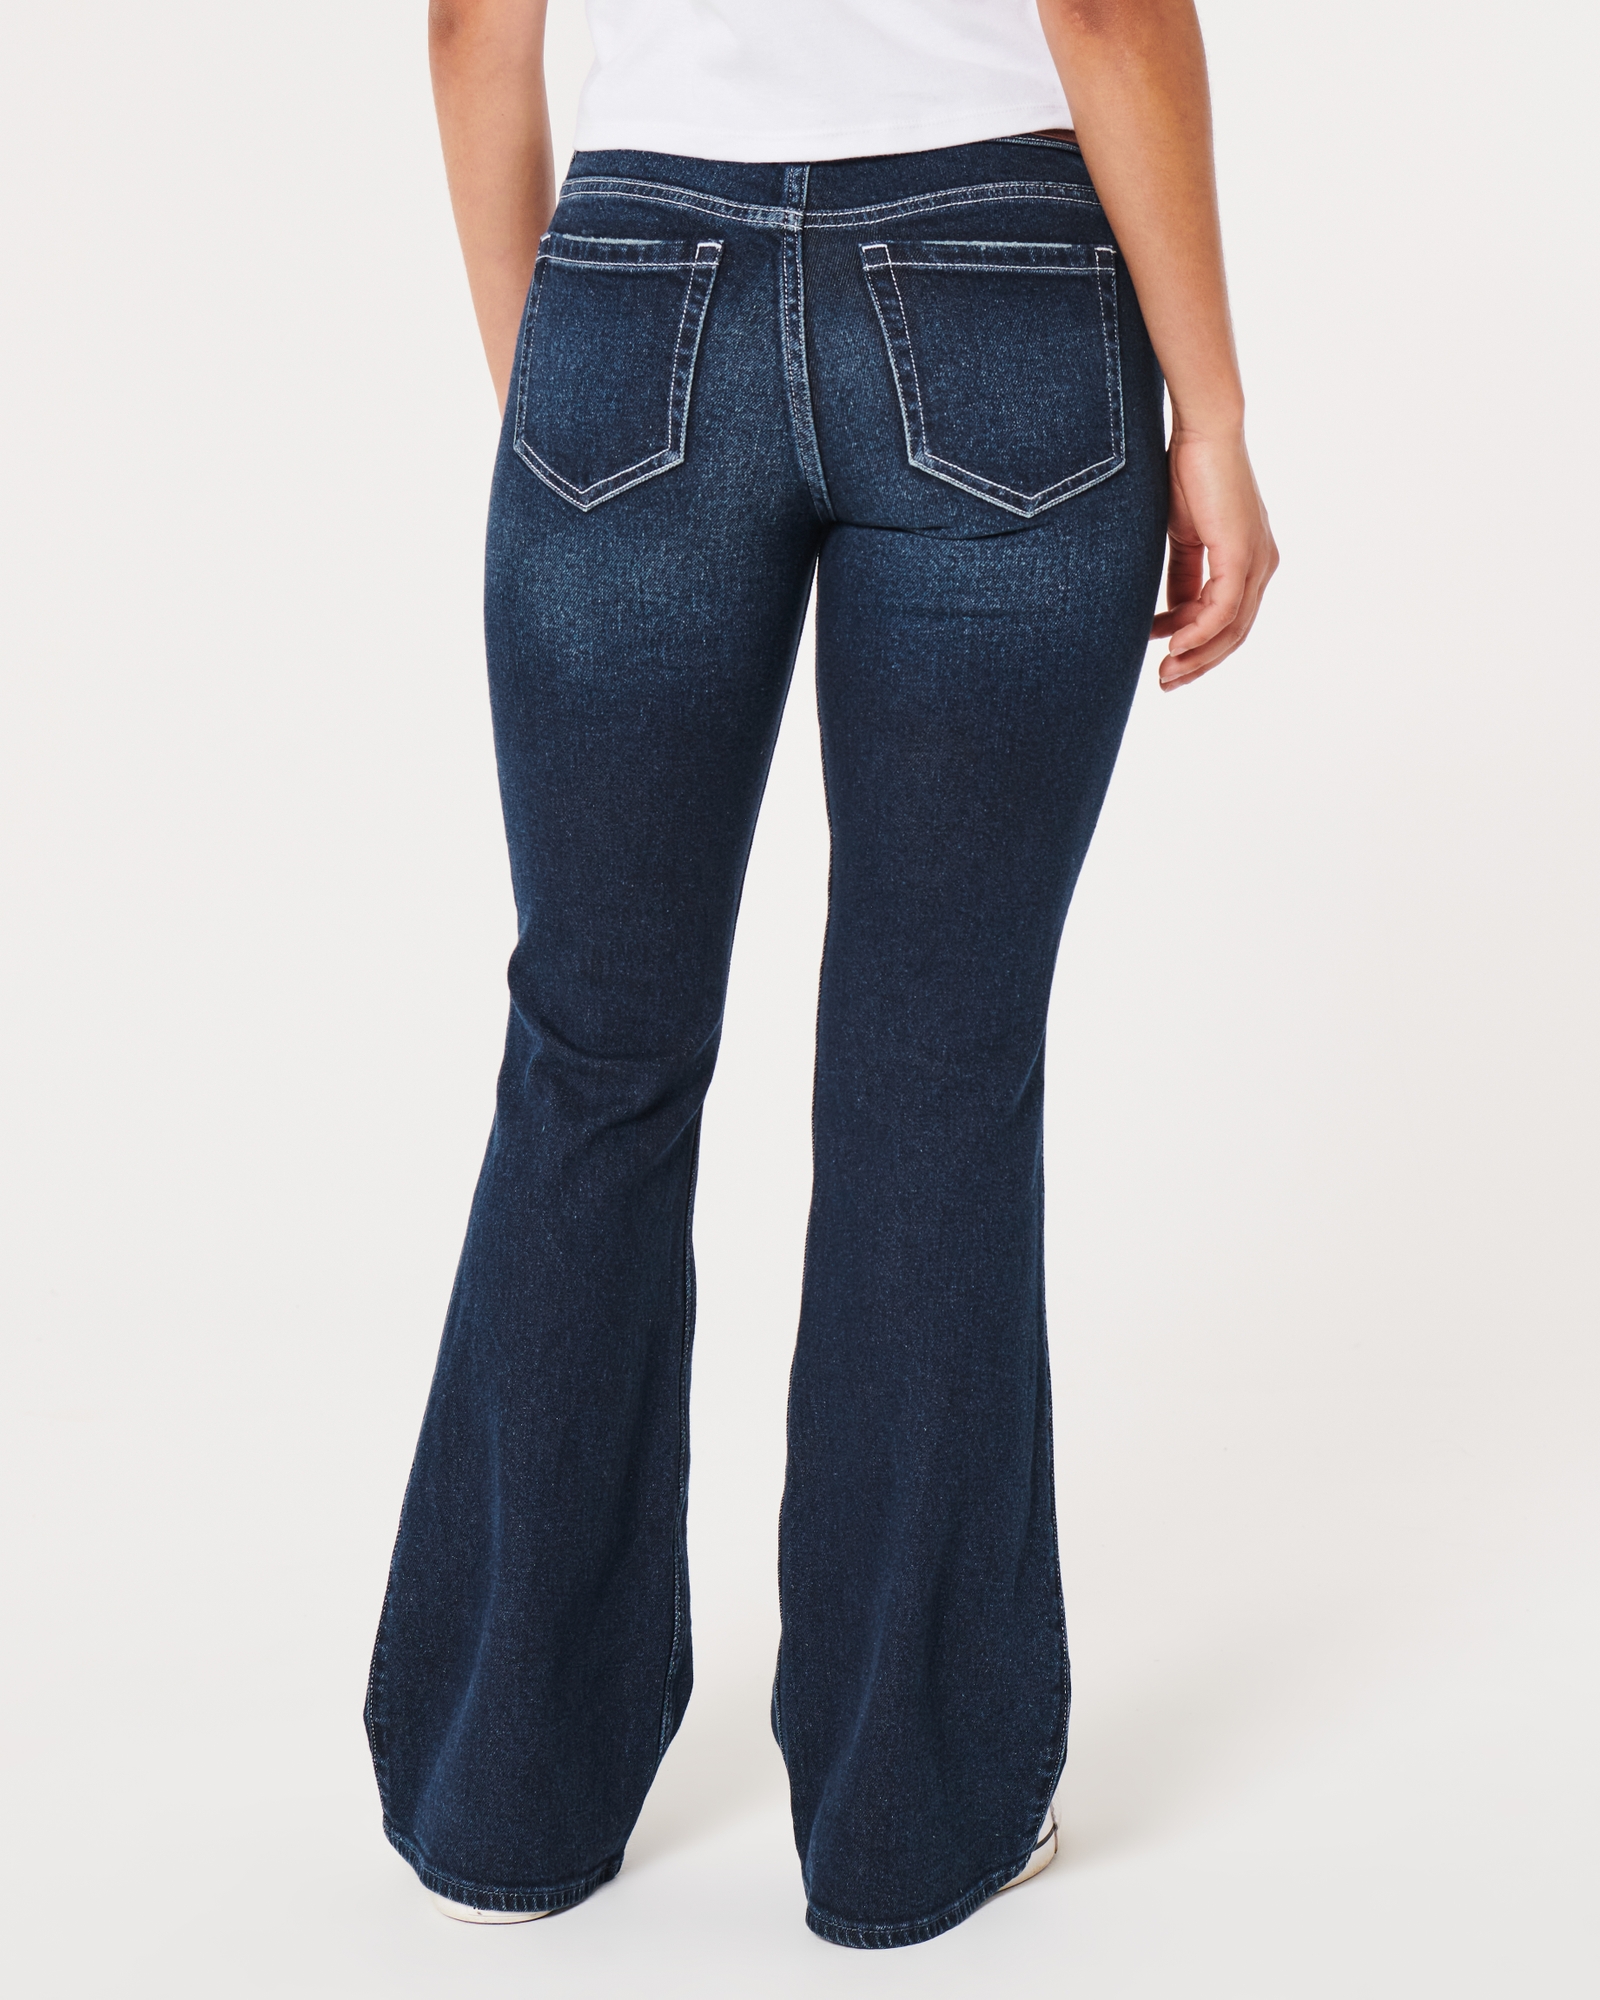 Women's Low-Rise Dark Wash Vintage Flare Jeans, Women's New Arrivals